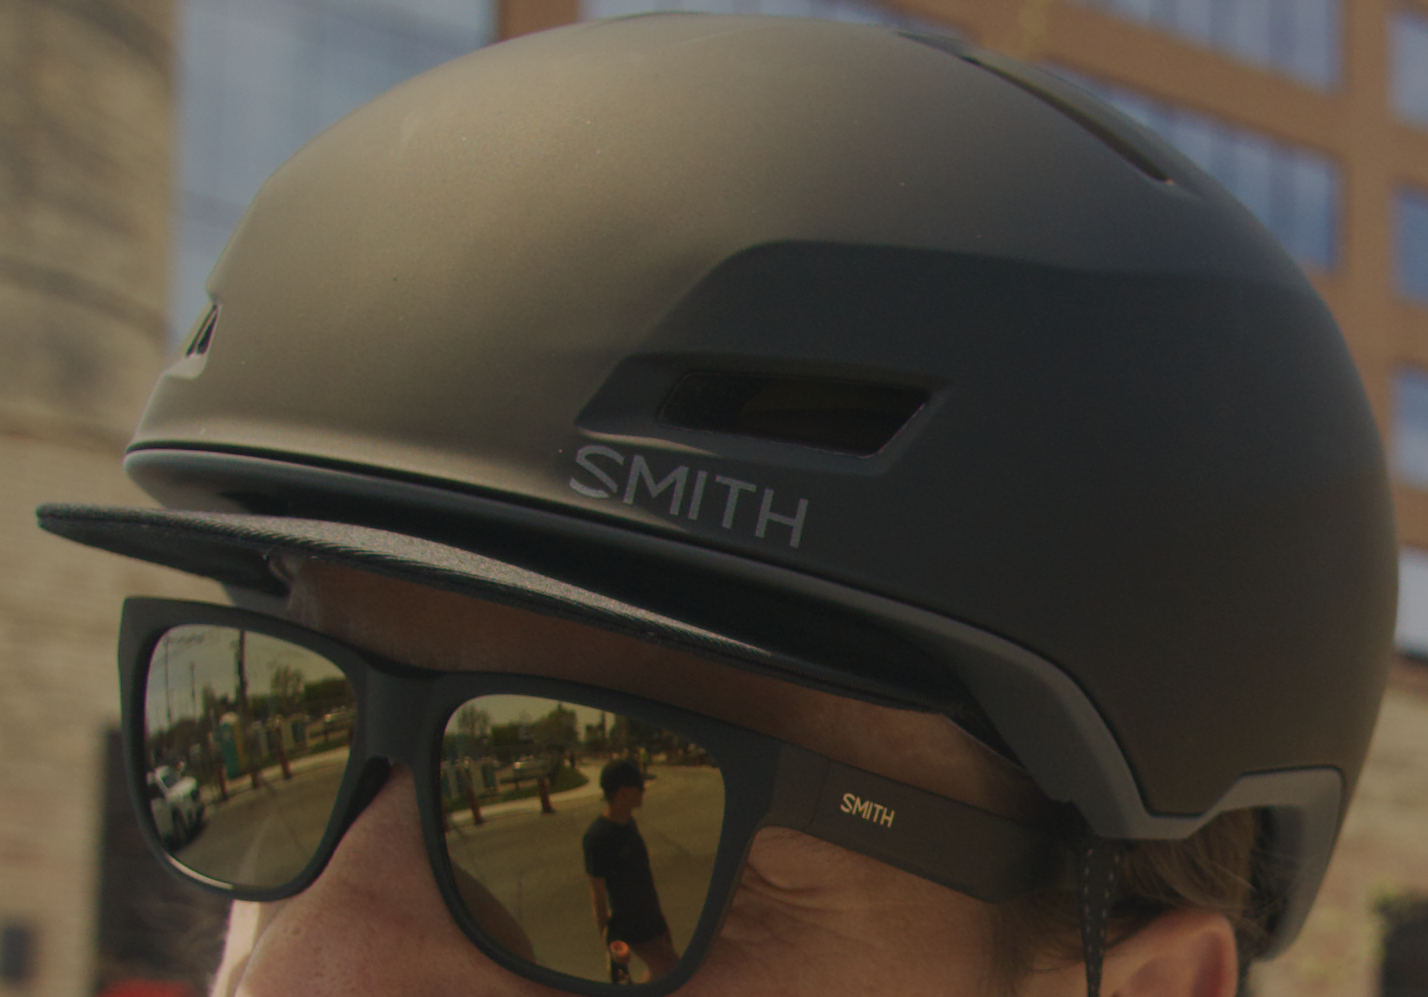 Smith Express helmet